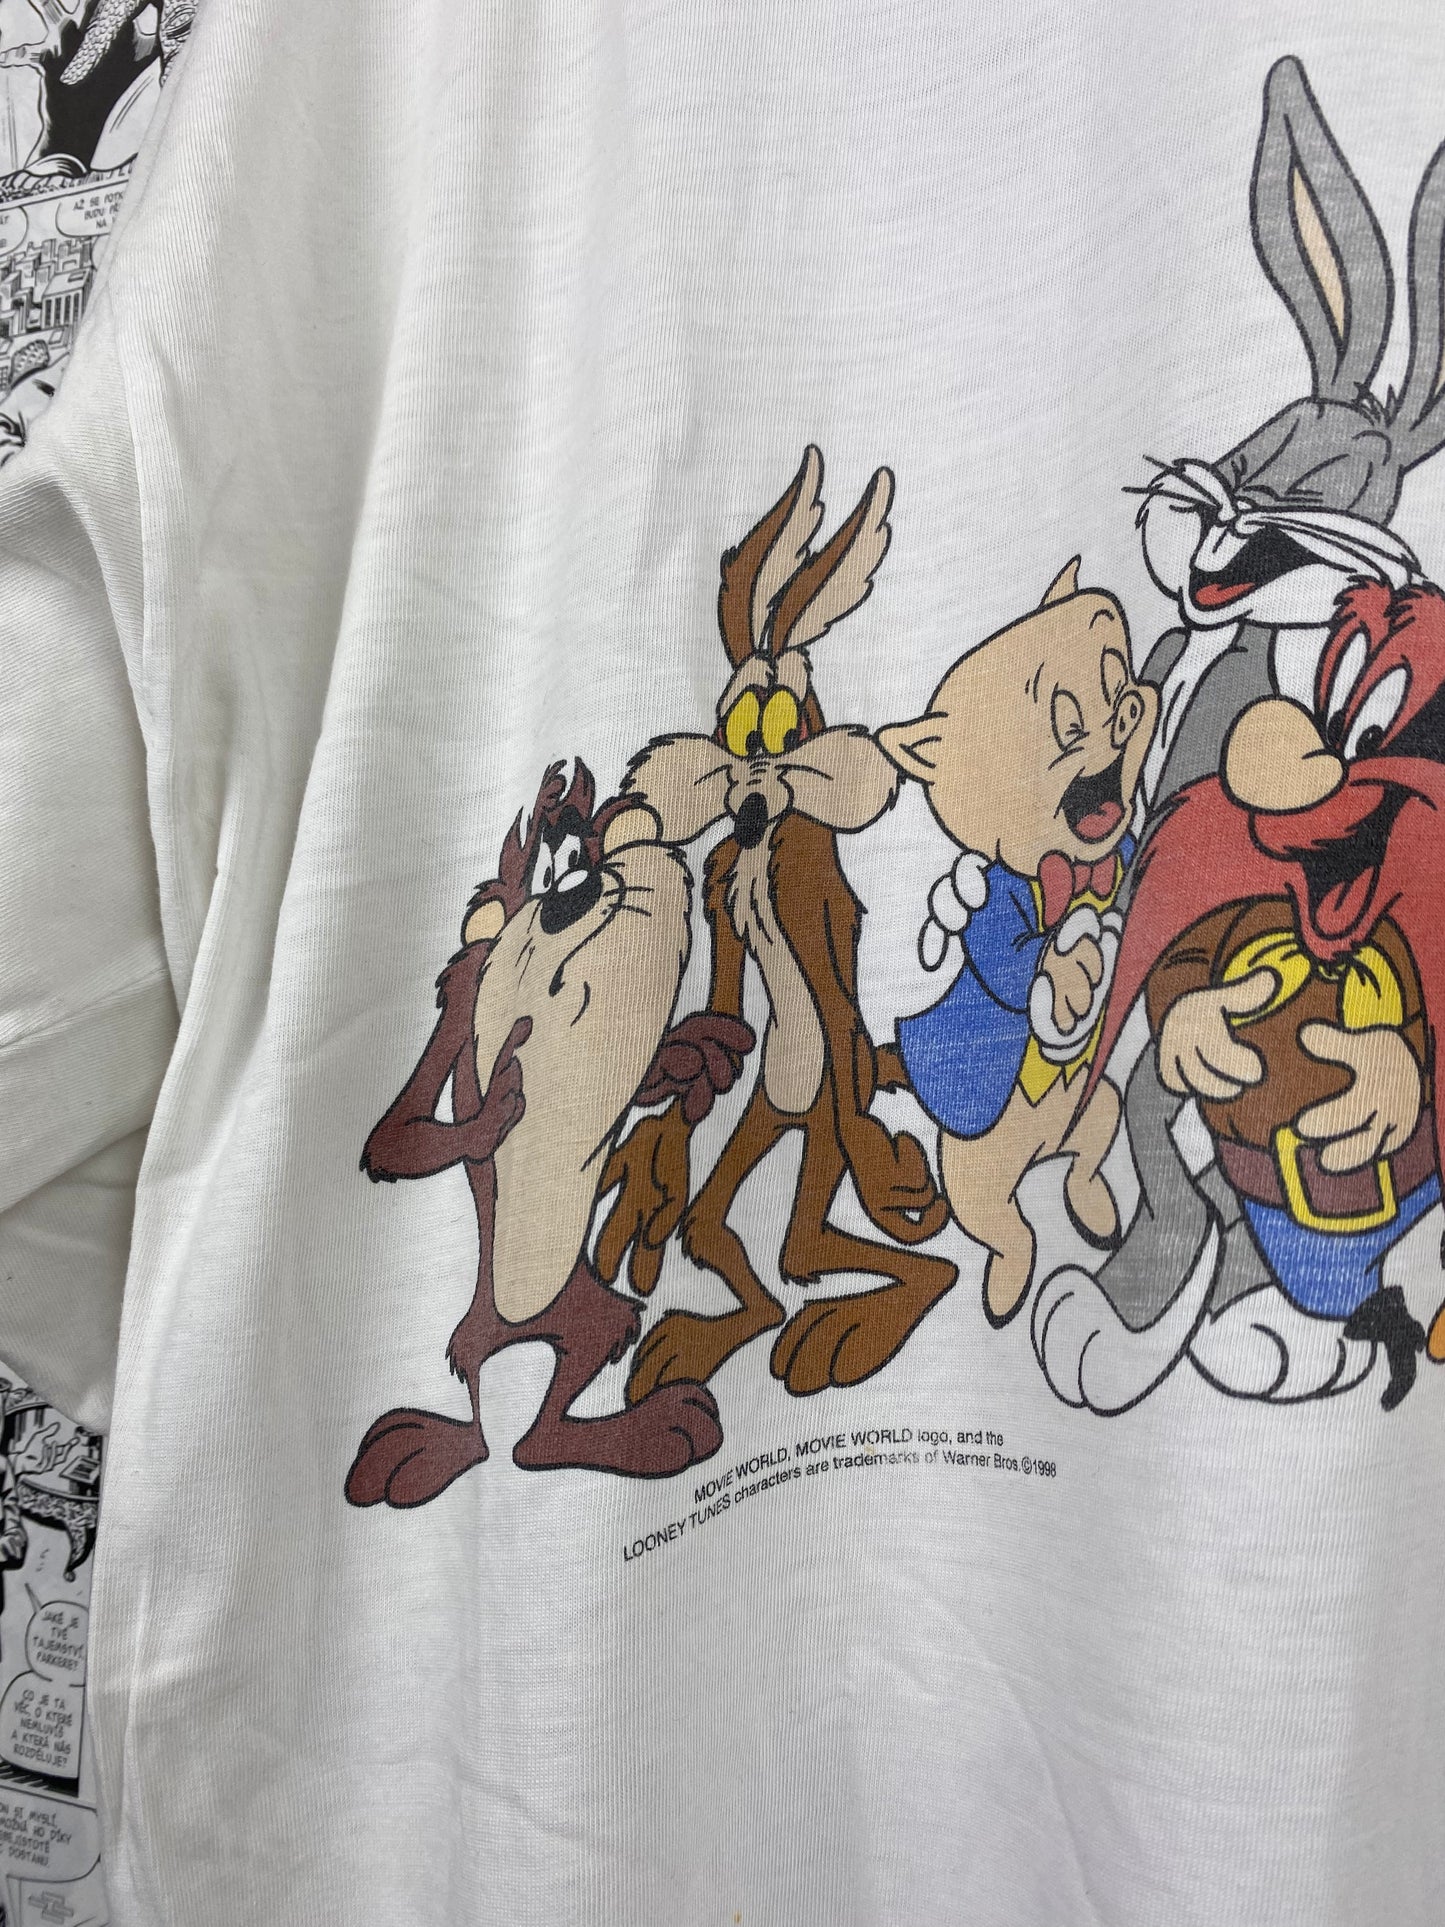 Vintage Looney Tunes 1998 t-shirt - size XL